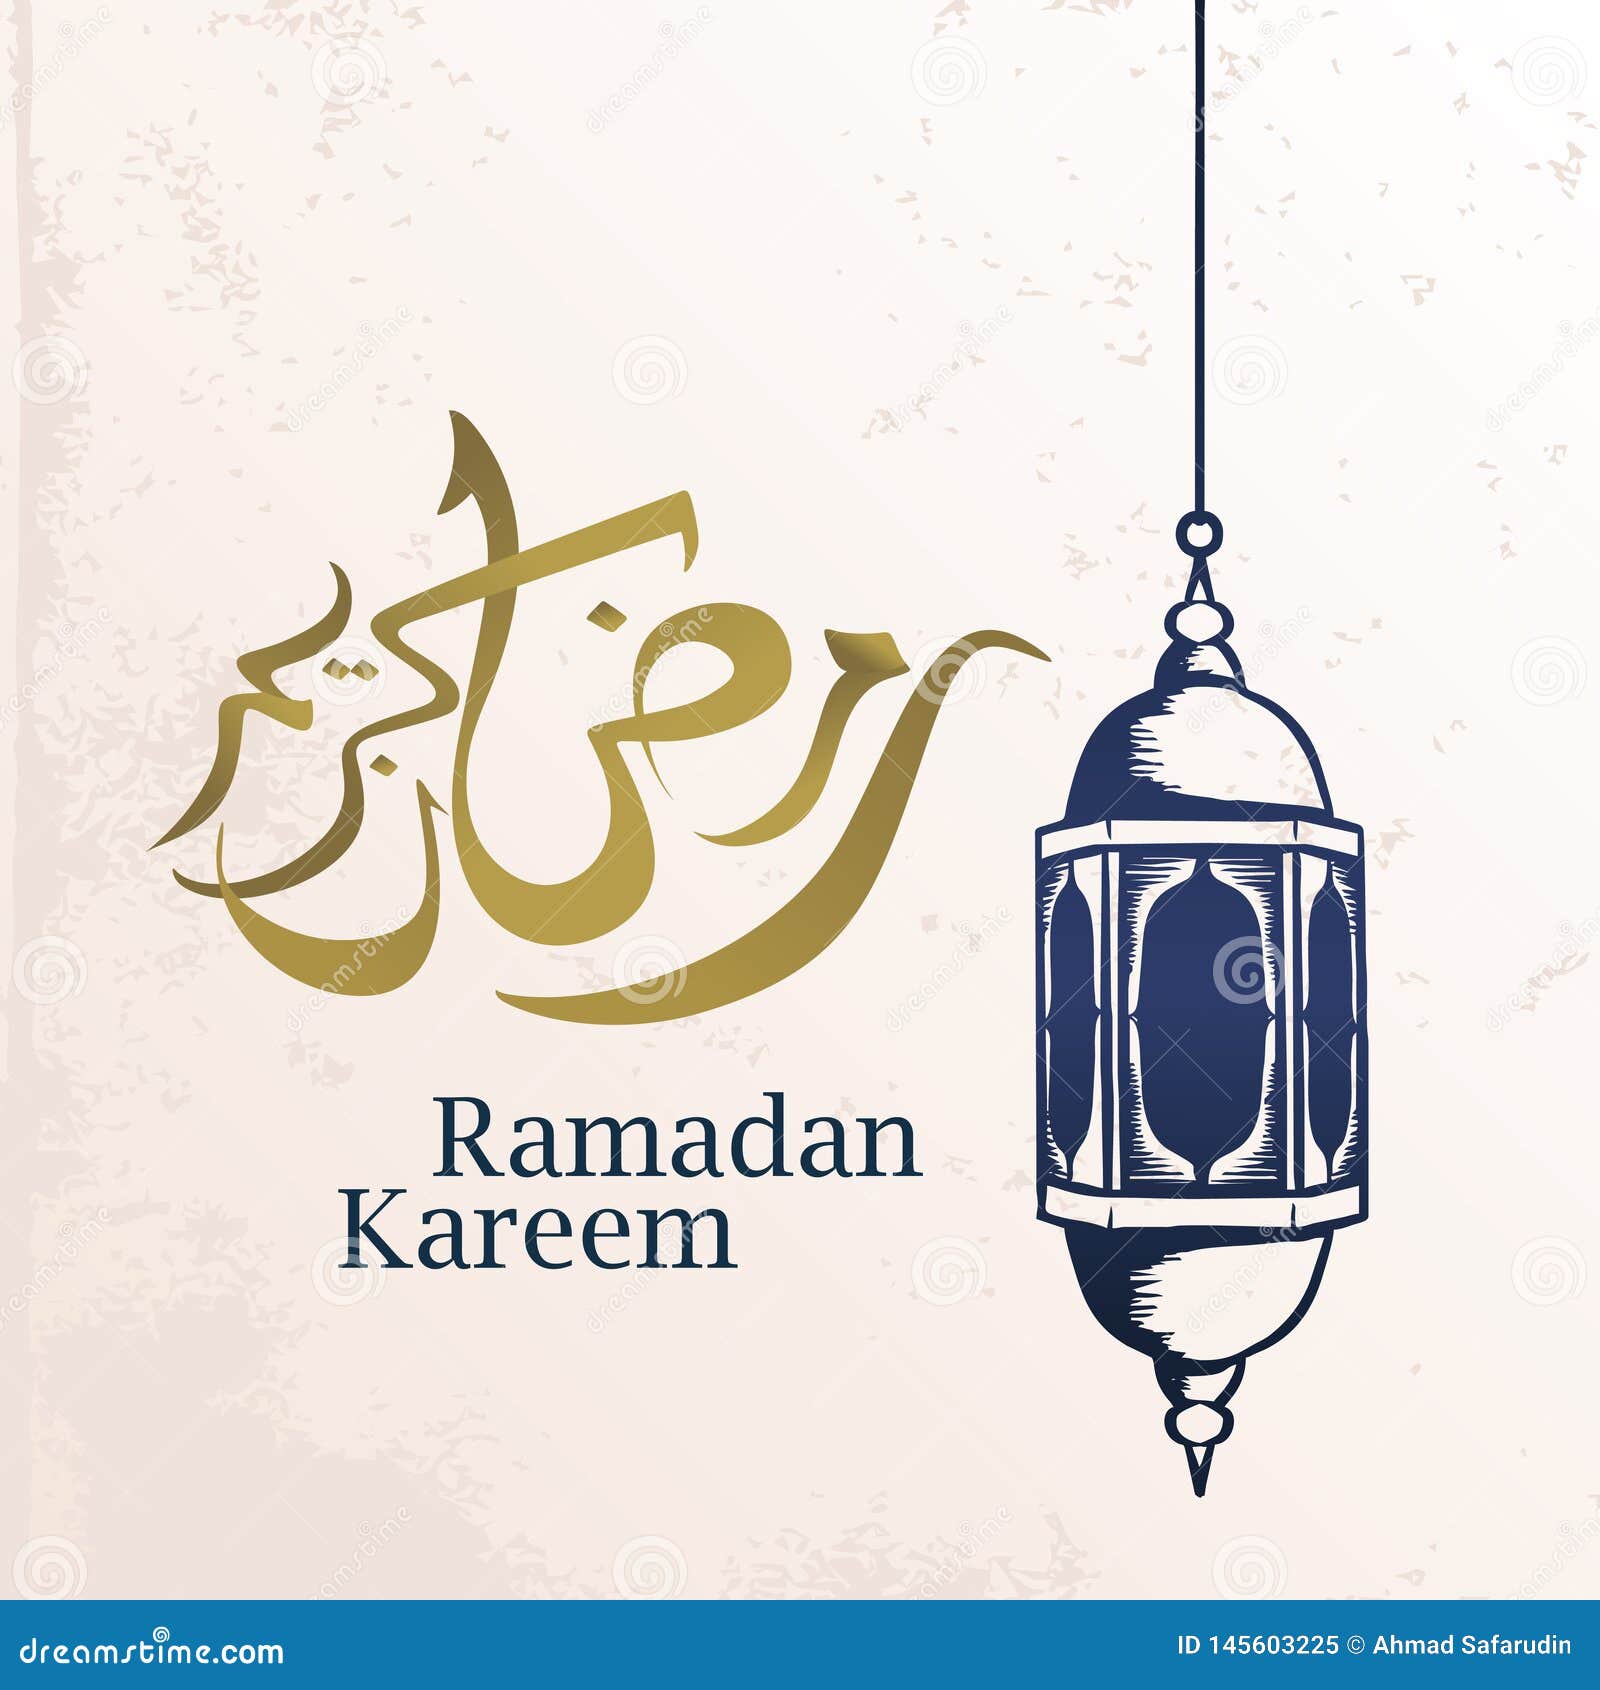 Ramadan Kareem Greeting Design With Arabic Calligraphy And Islamic